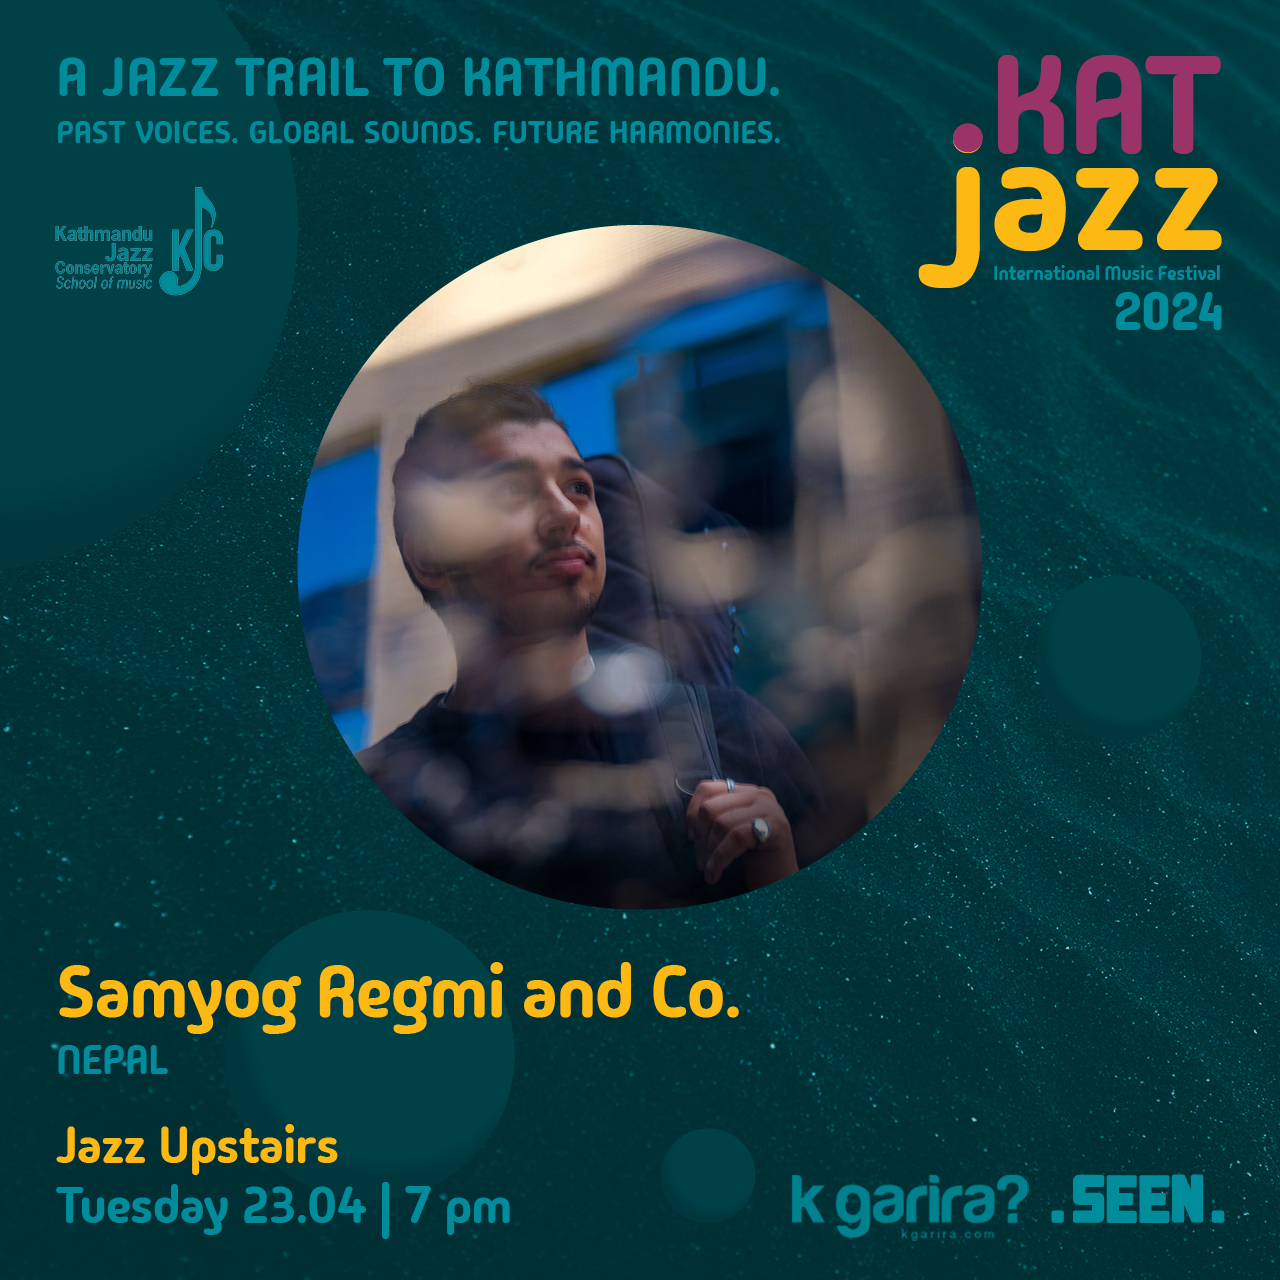 Kat Jazz - Samyog Regmi and co.